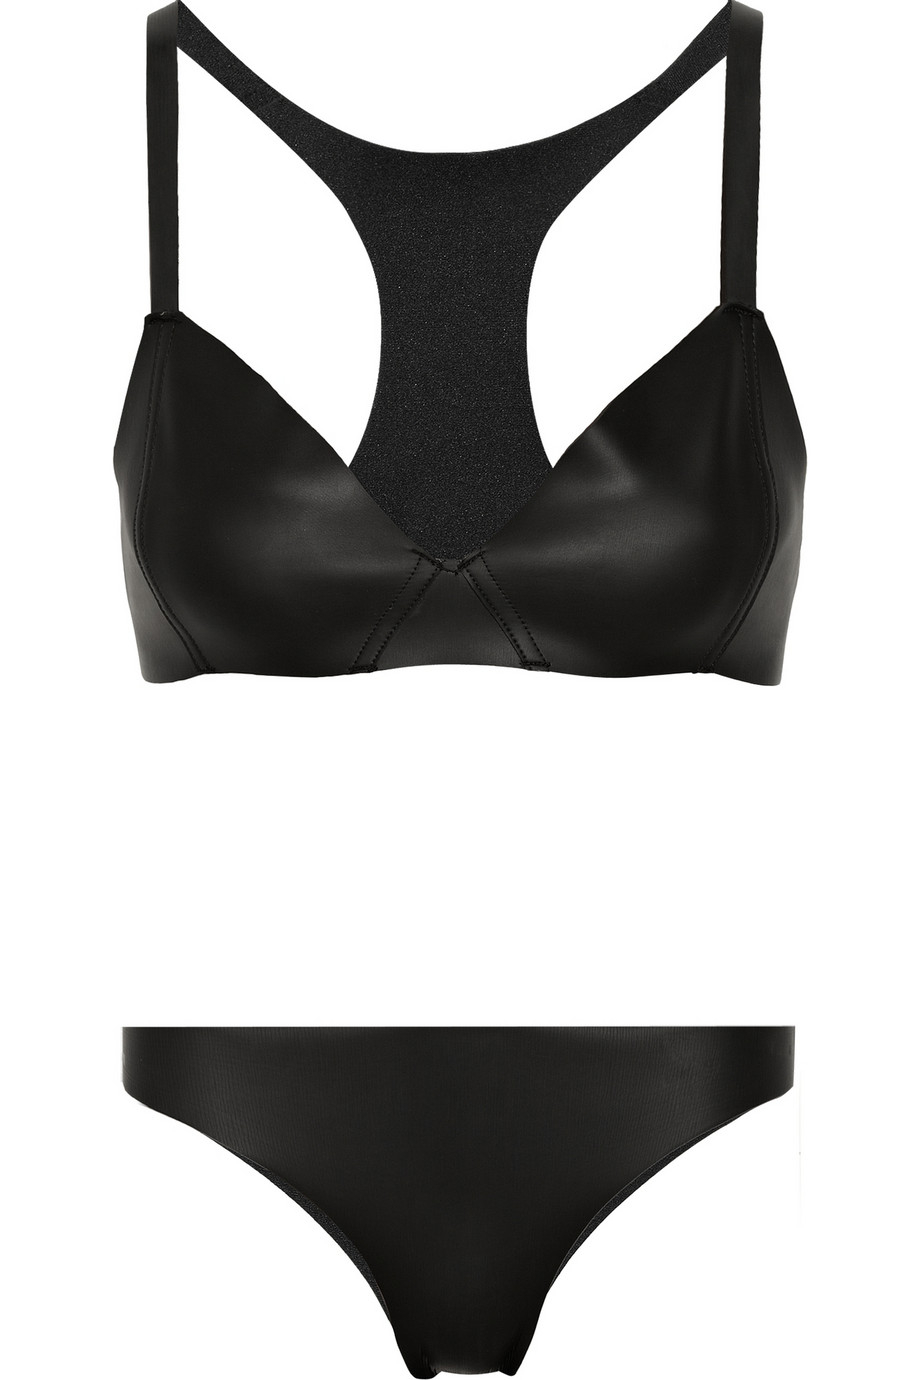 Mikoh Swimwear Trestles Racerback Rubberized Neoprene Bikini in Black ...